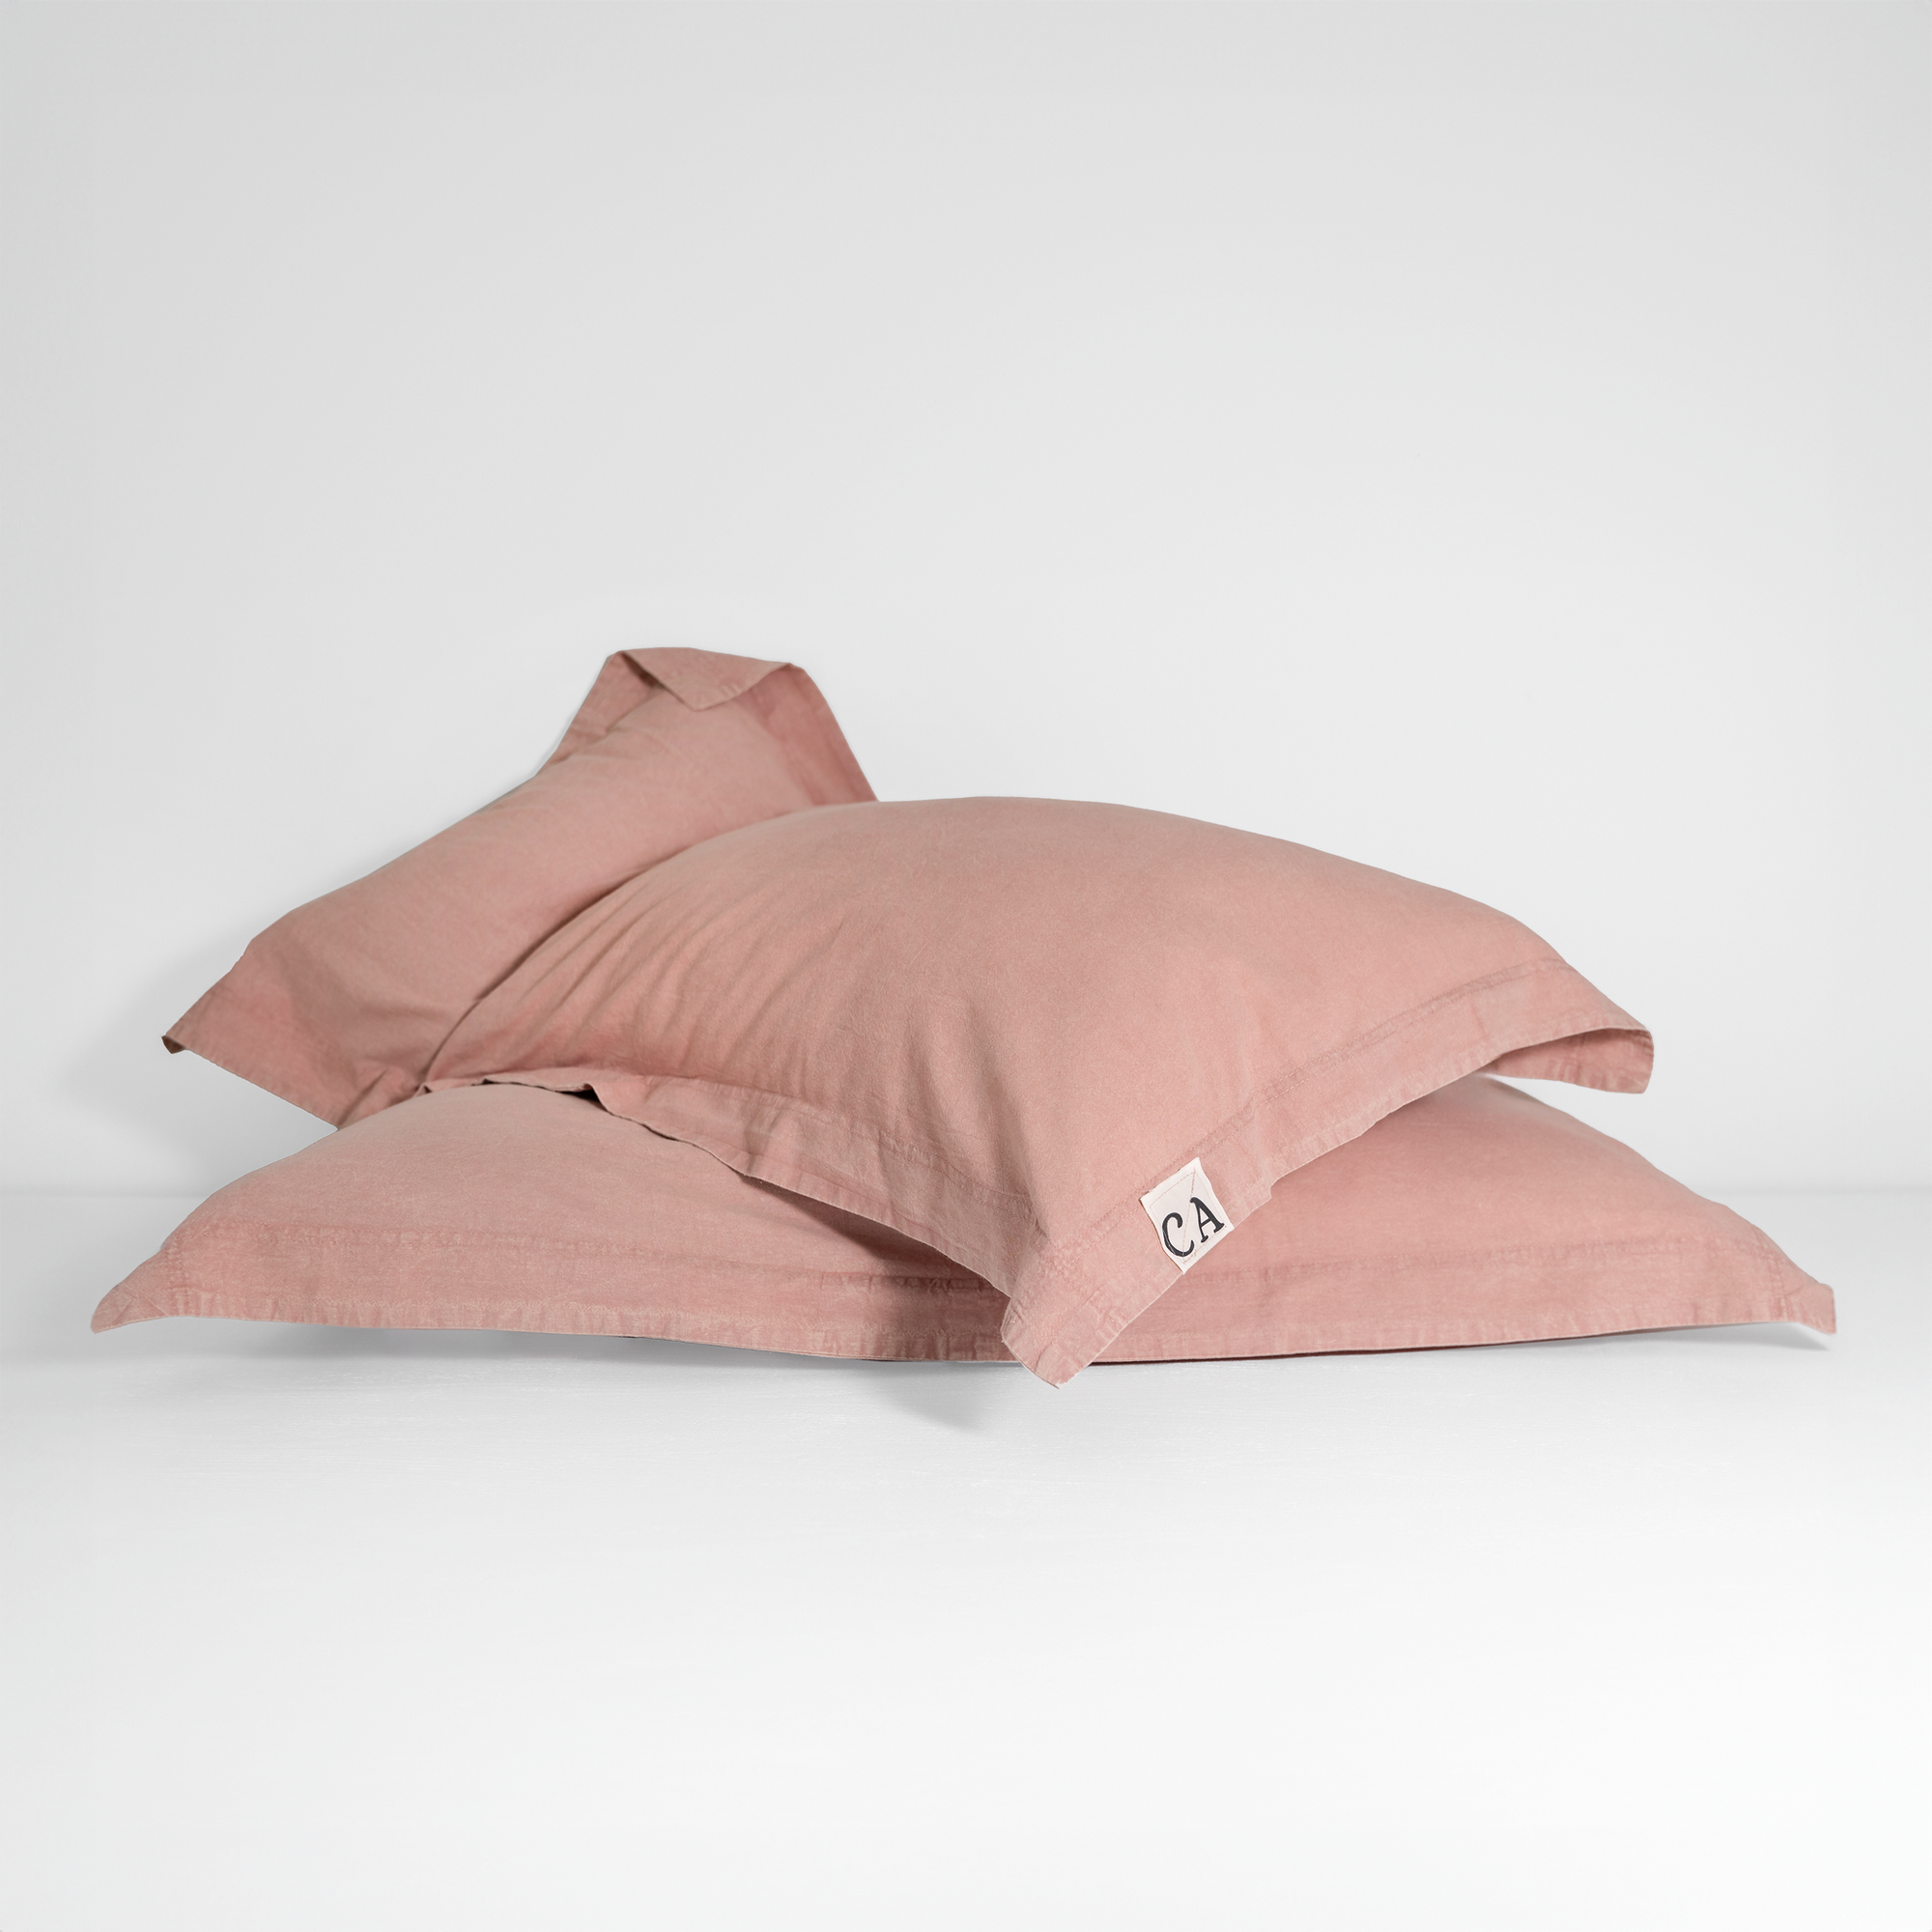 100% Organic Cotton Canvas Pillowcase │King │Dusty Pink